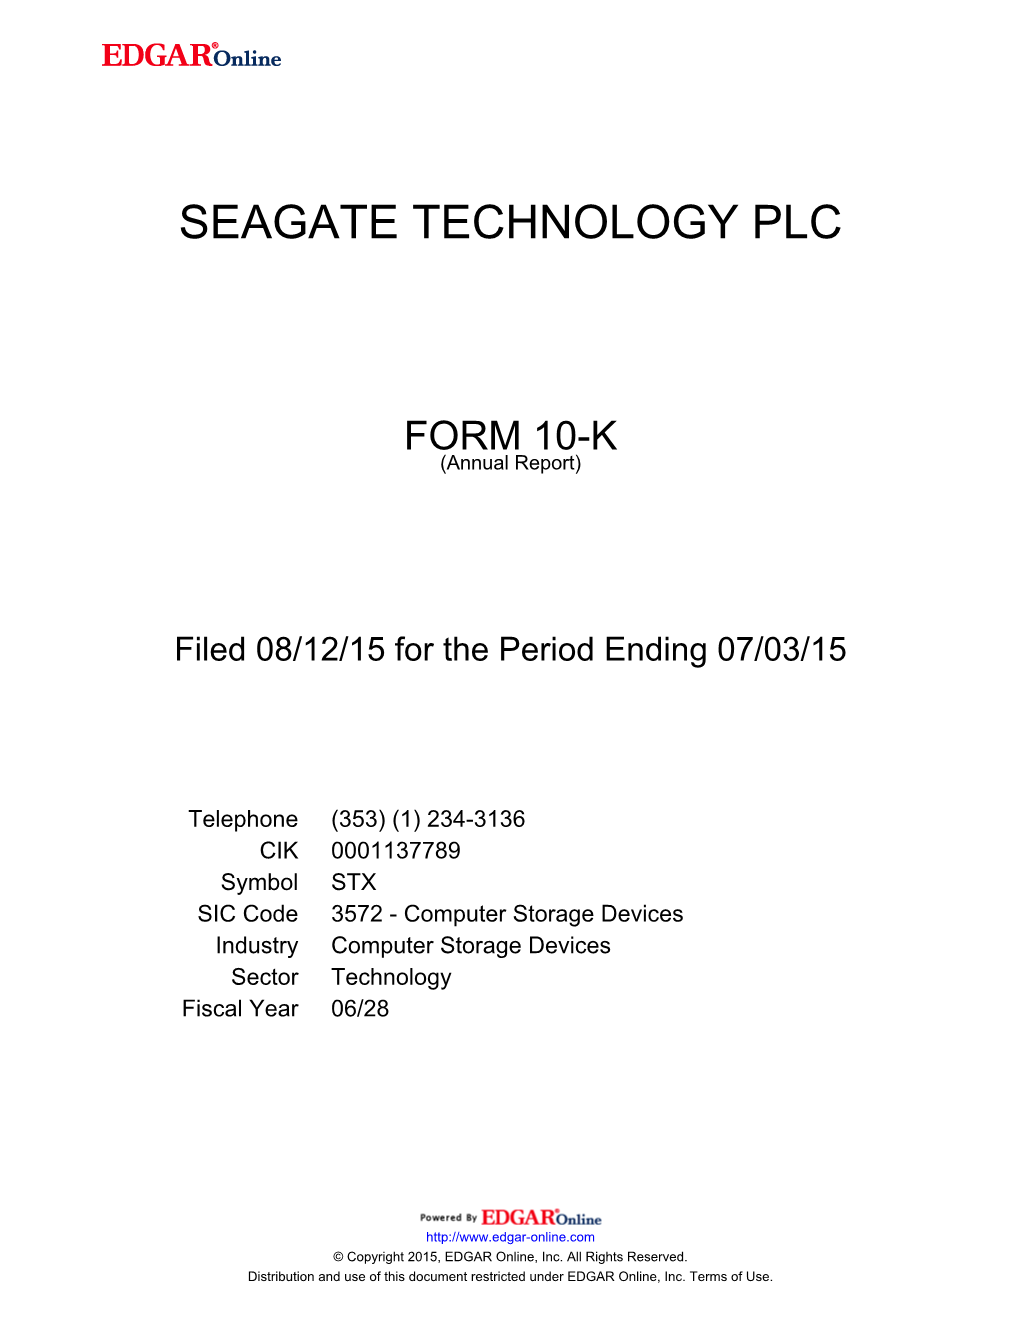 Seagate Technology Plc